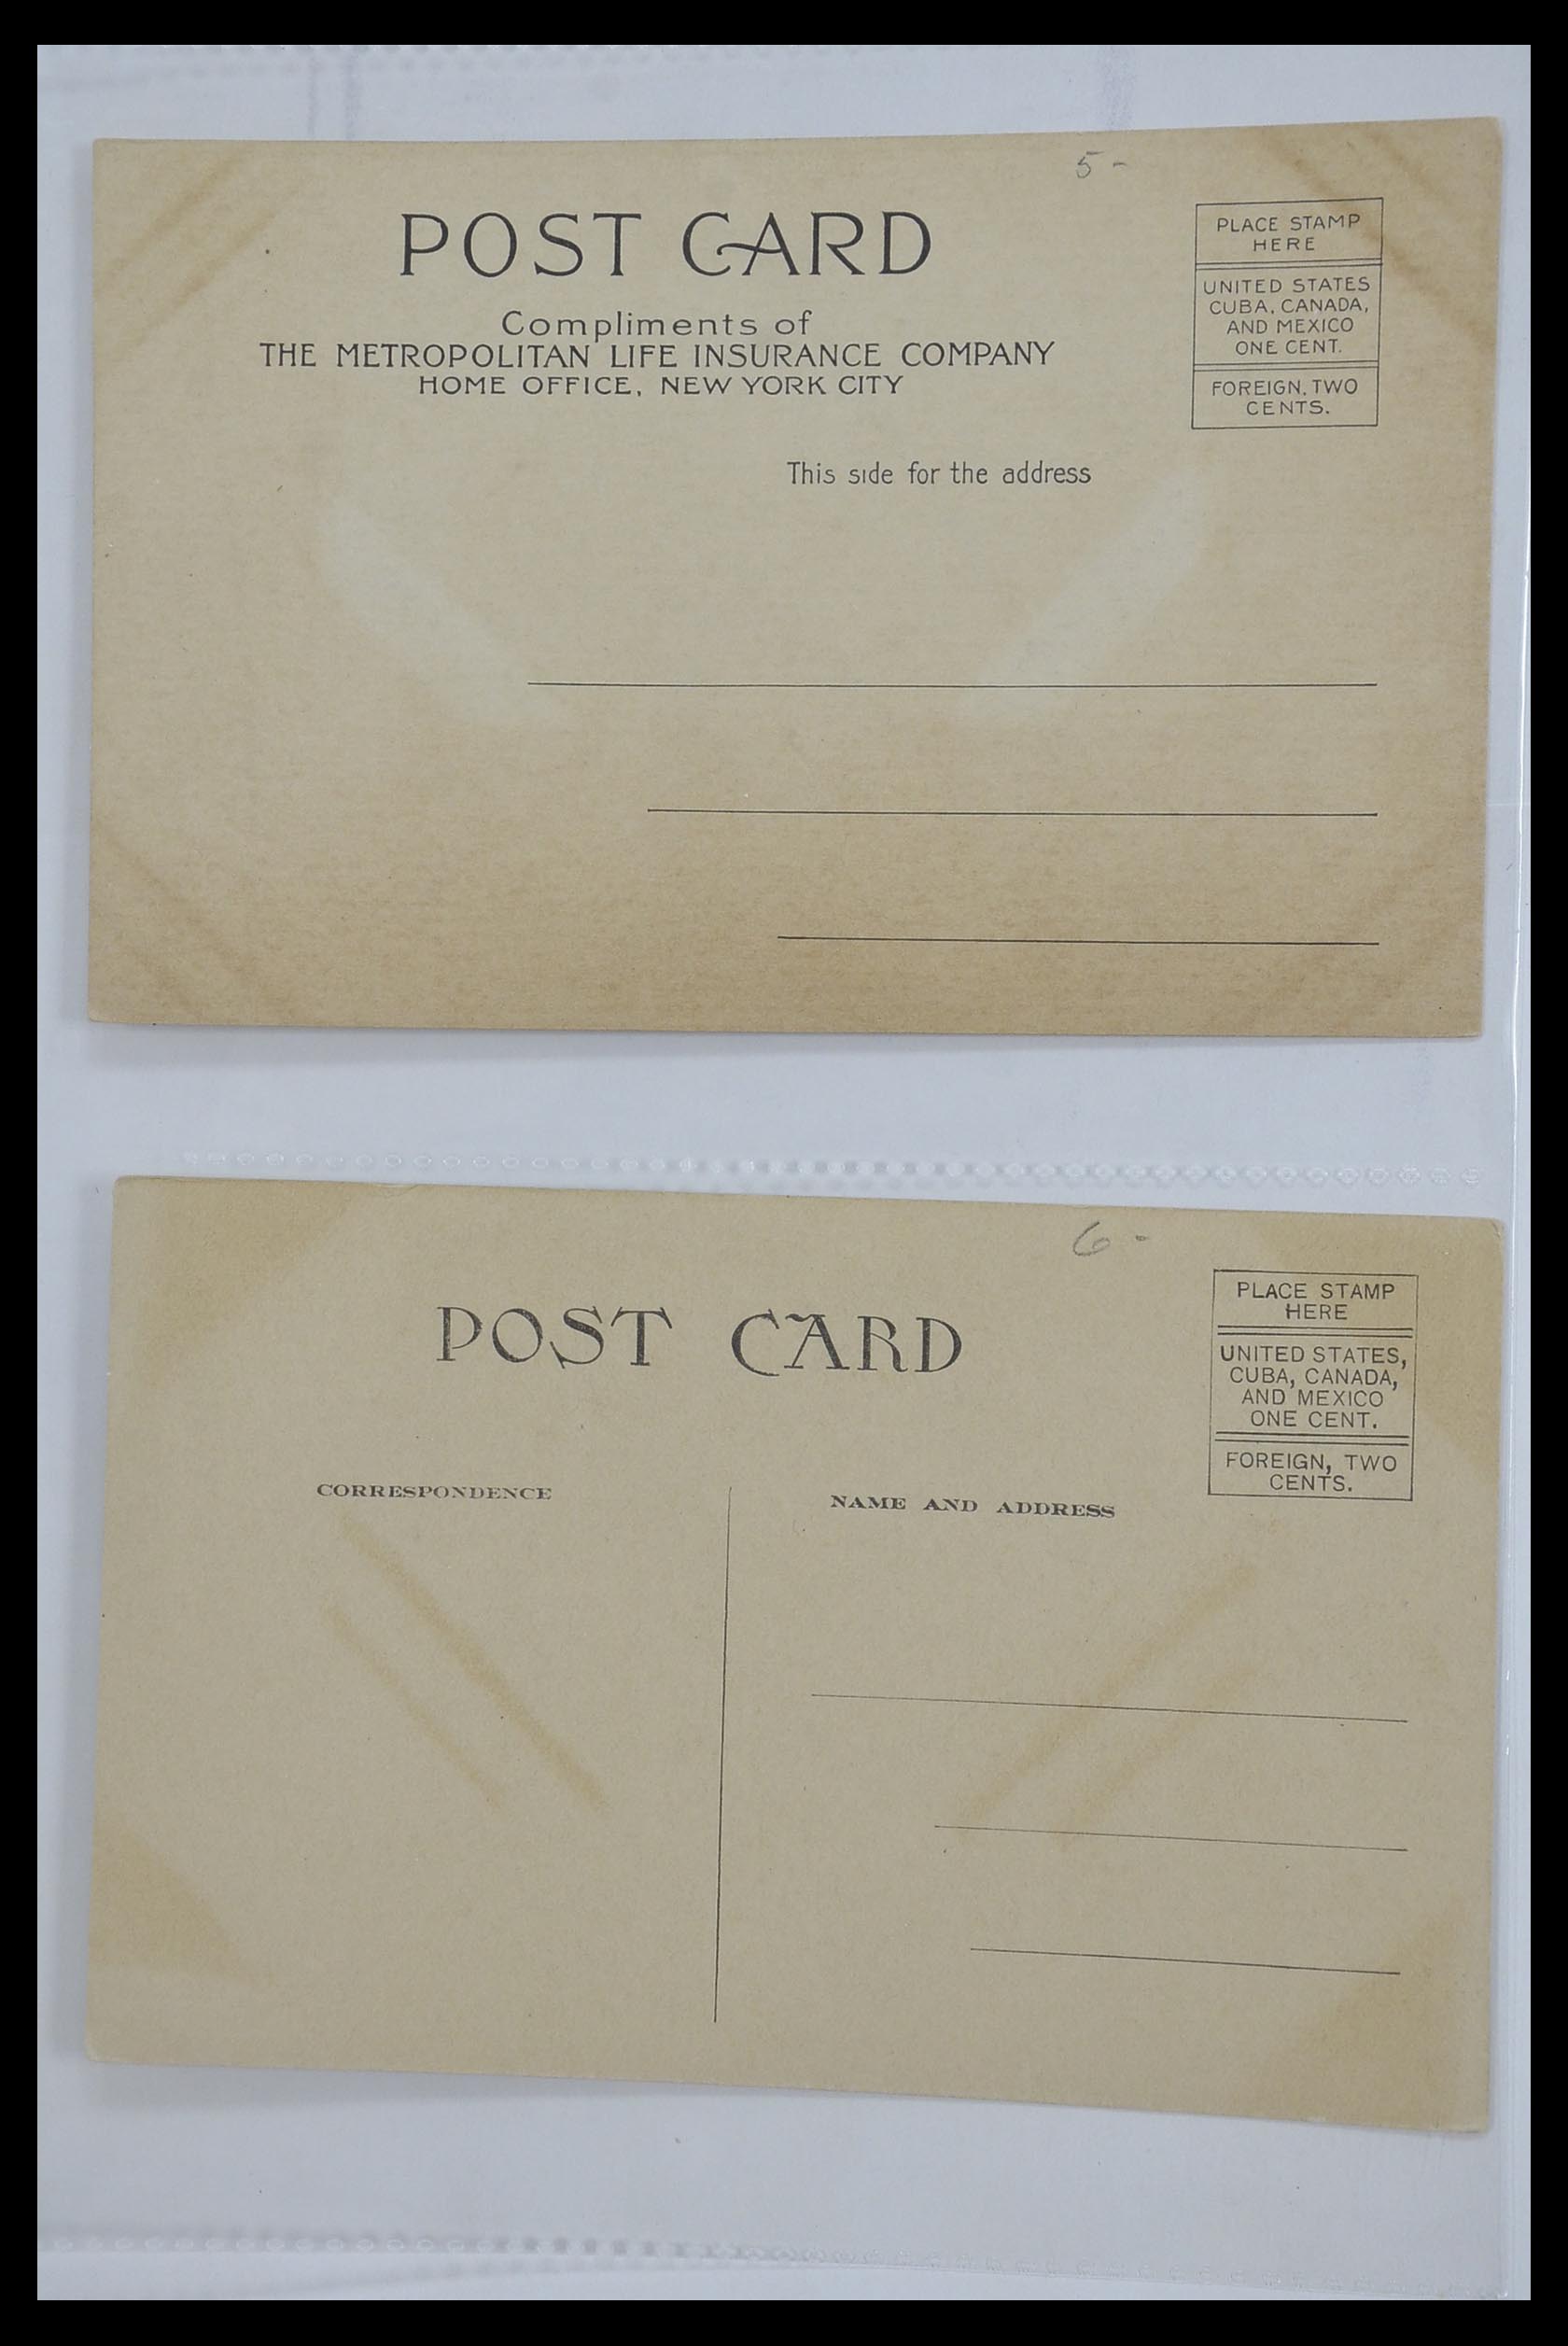 33501 089 - Stamp collection 33501 USA postal cards 1880-1920.